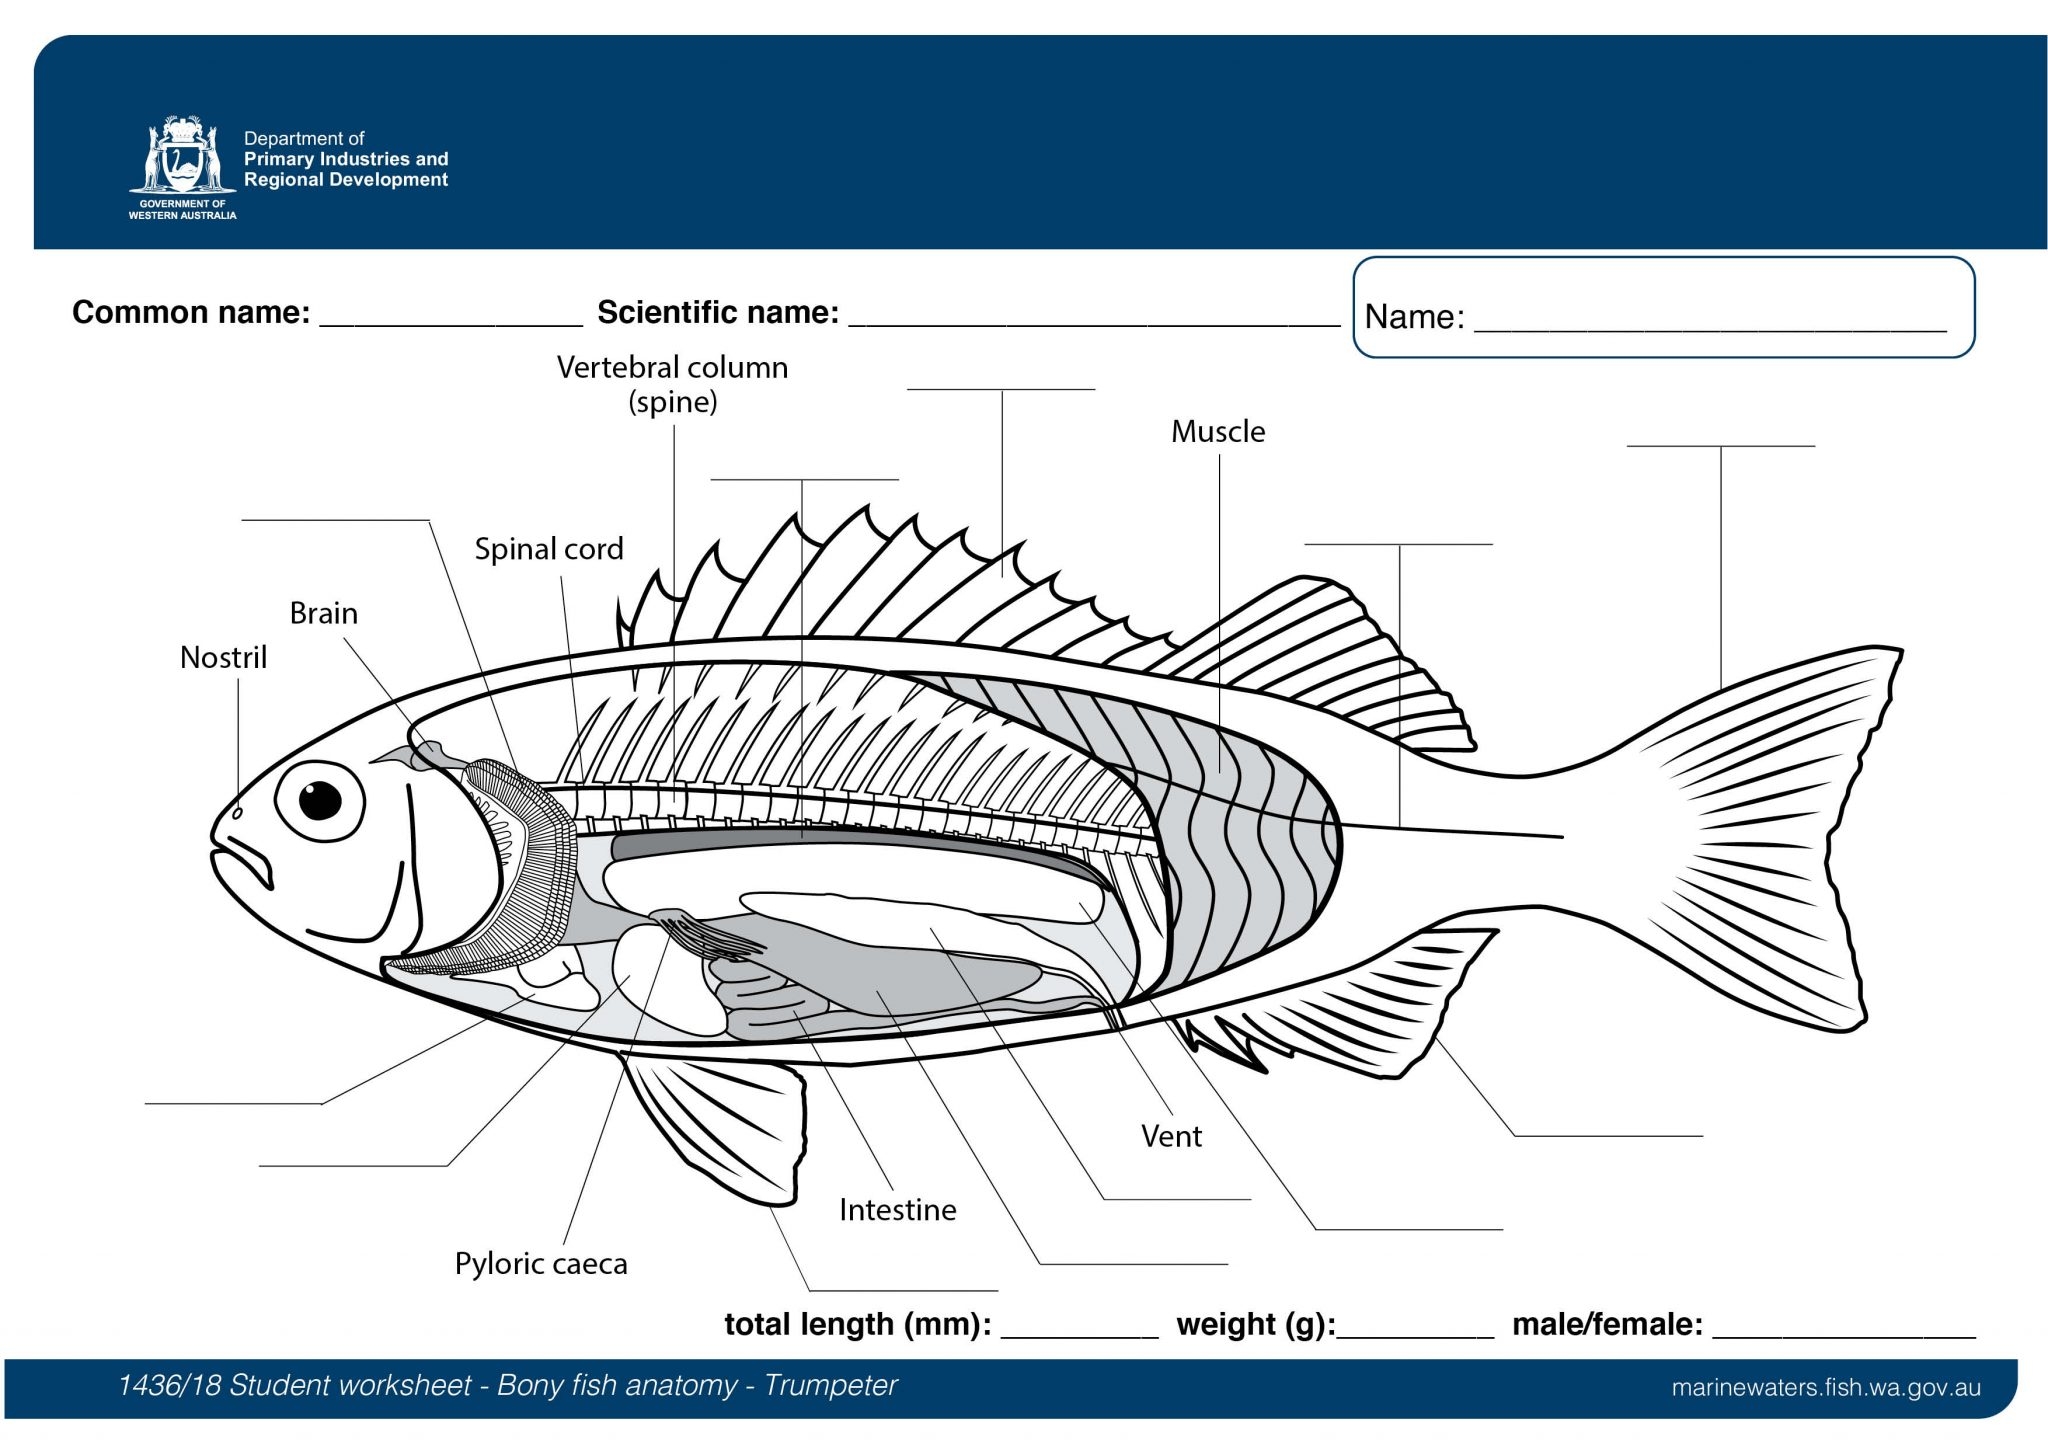 Student Worksheet Bony Fish Anatomy Trumpeter Department Of Primary Industries And Regional Development